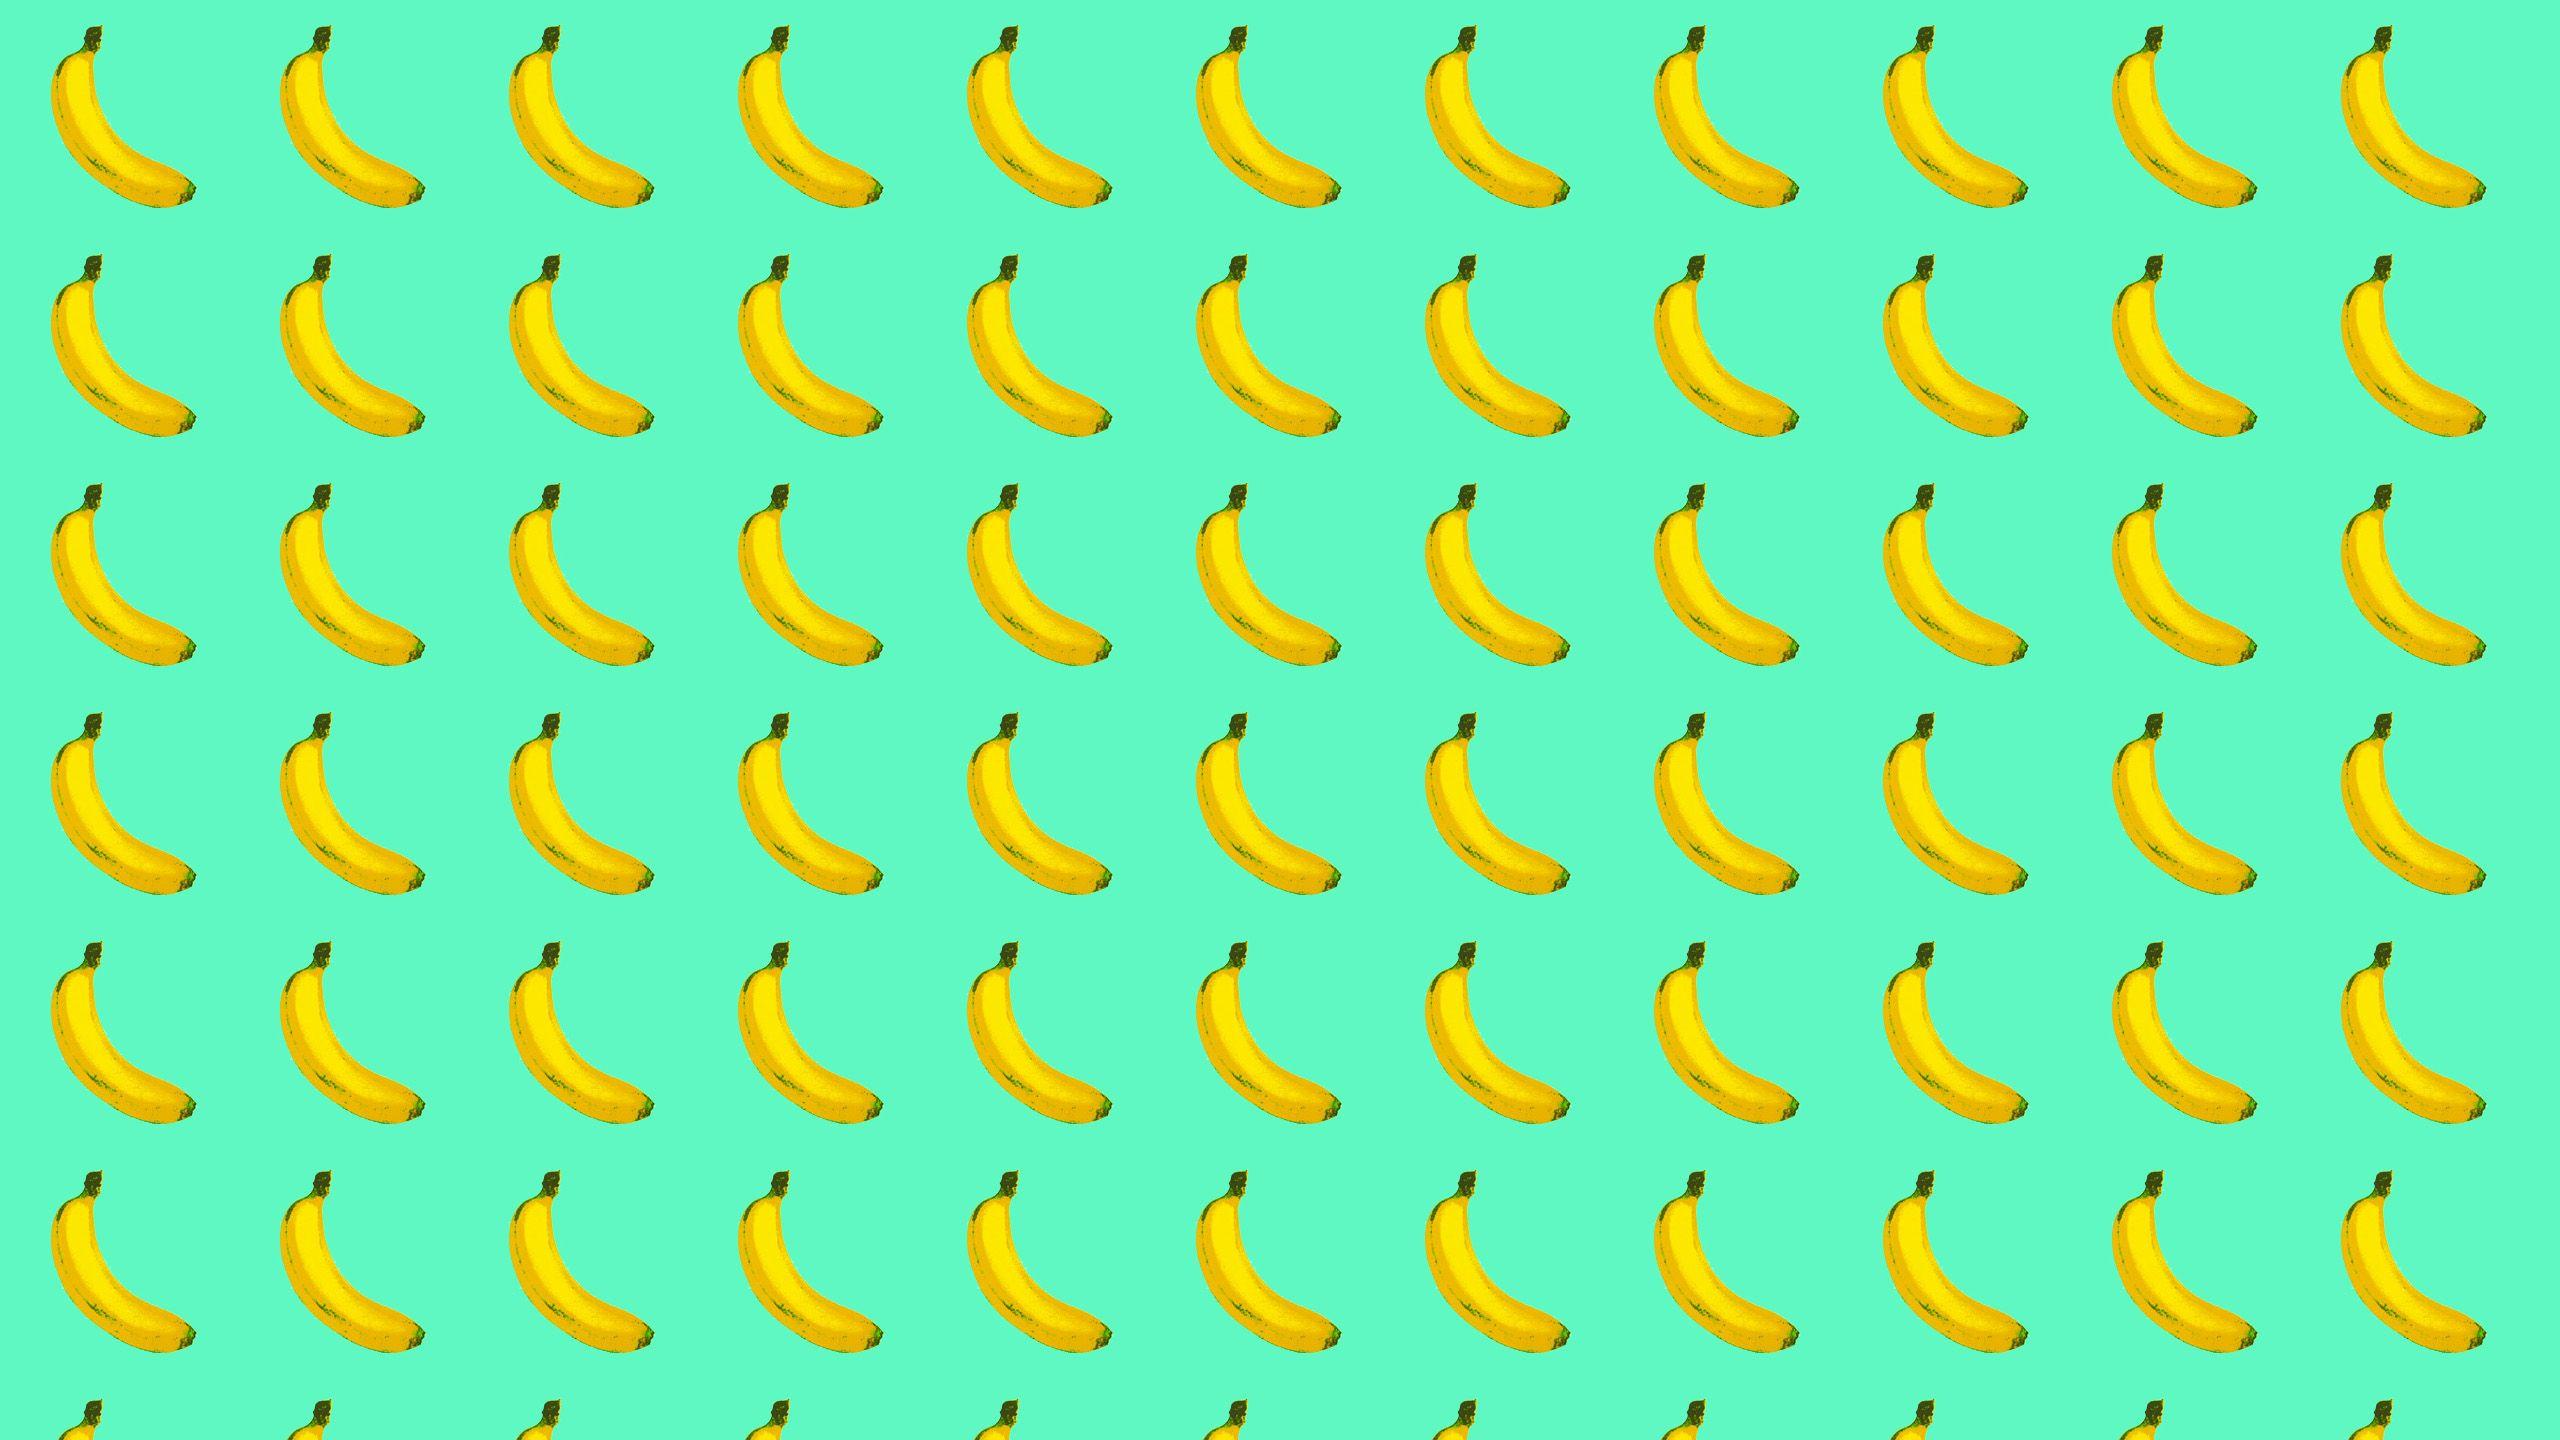 Banana pattern wallpaper